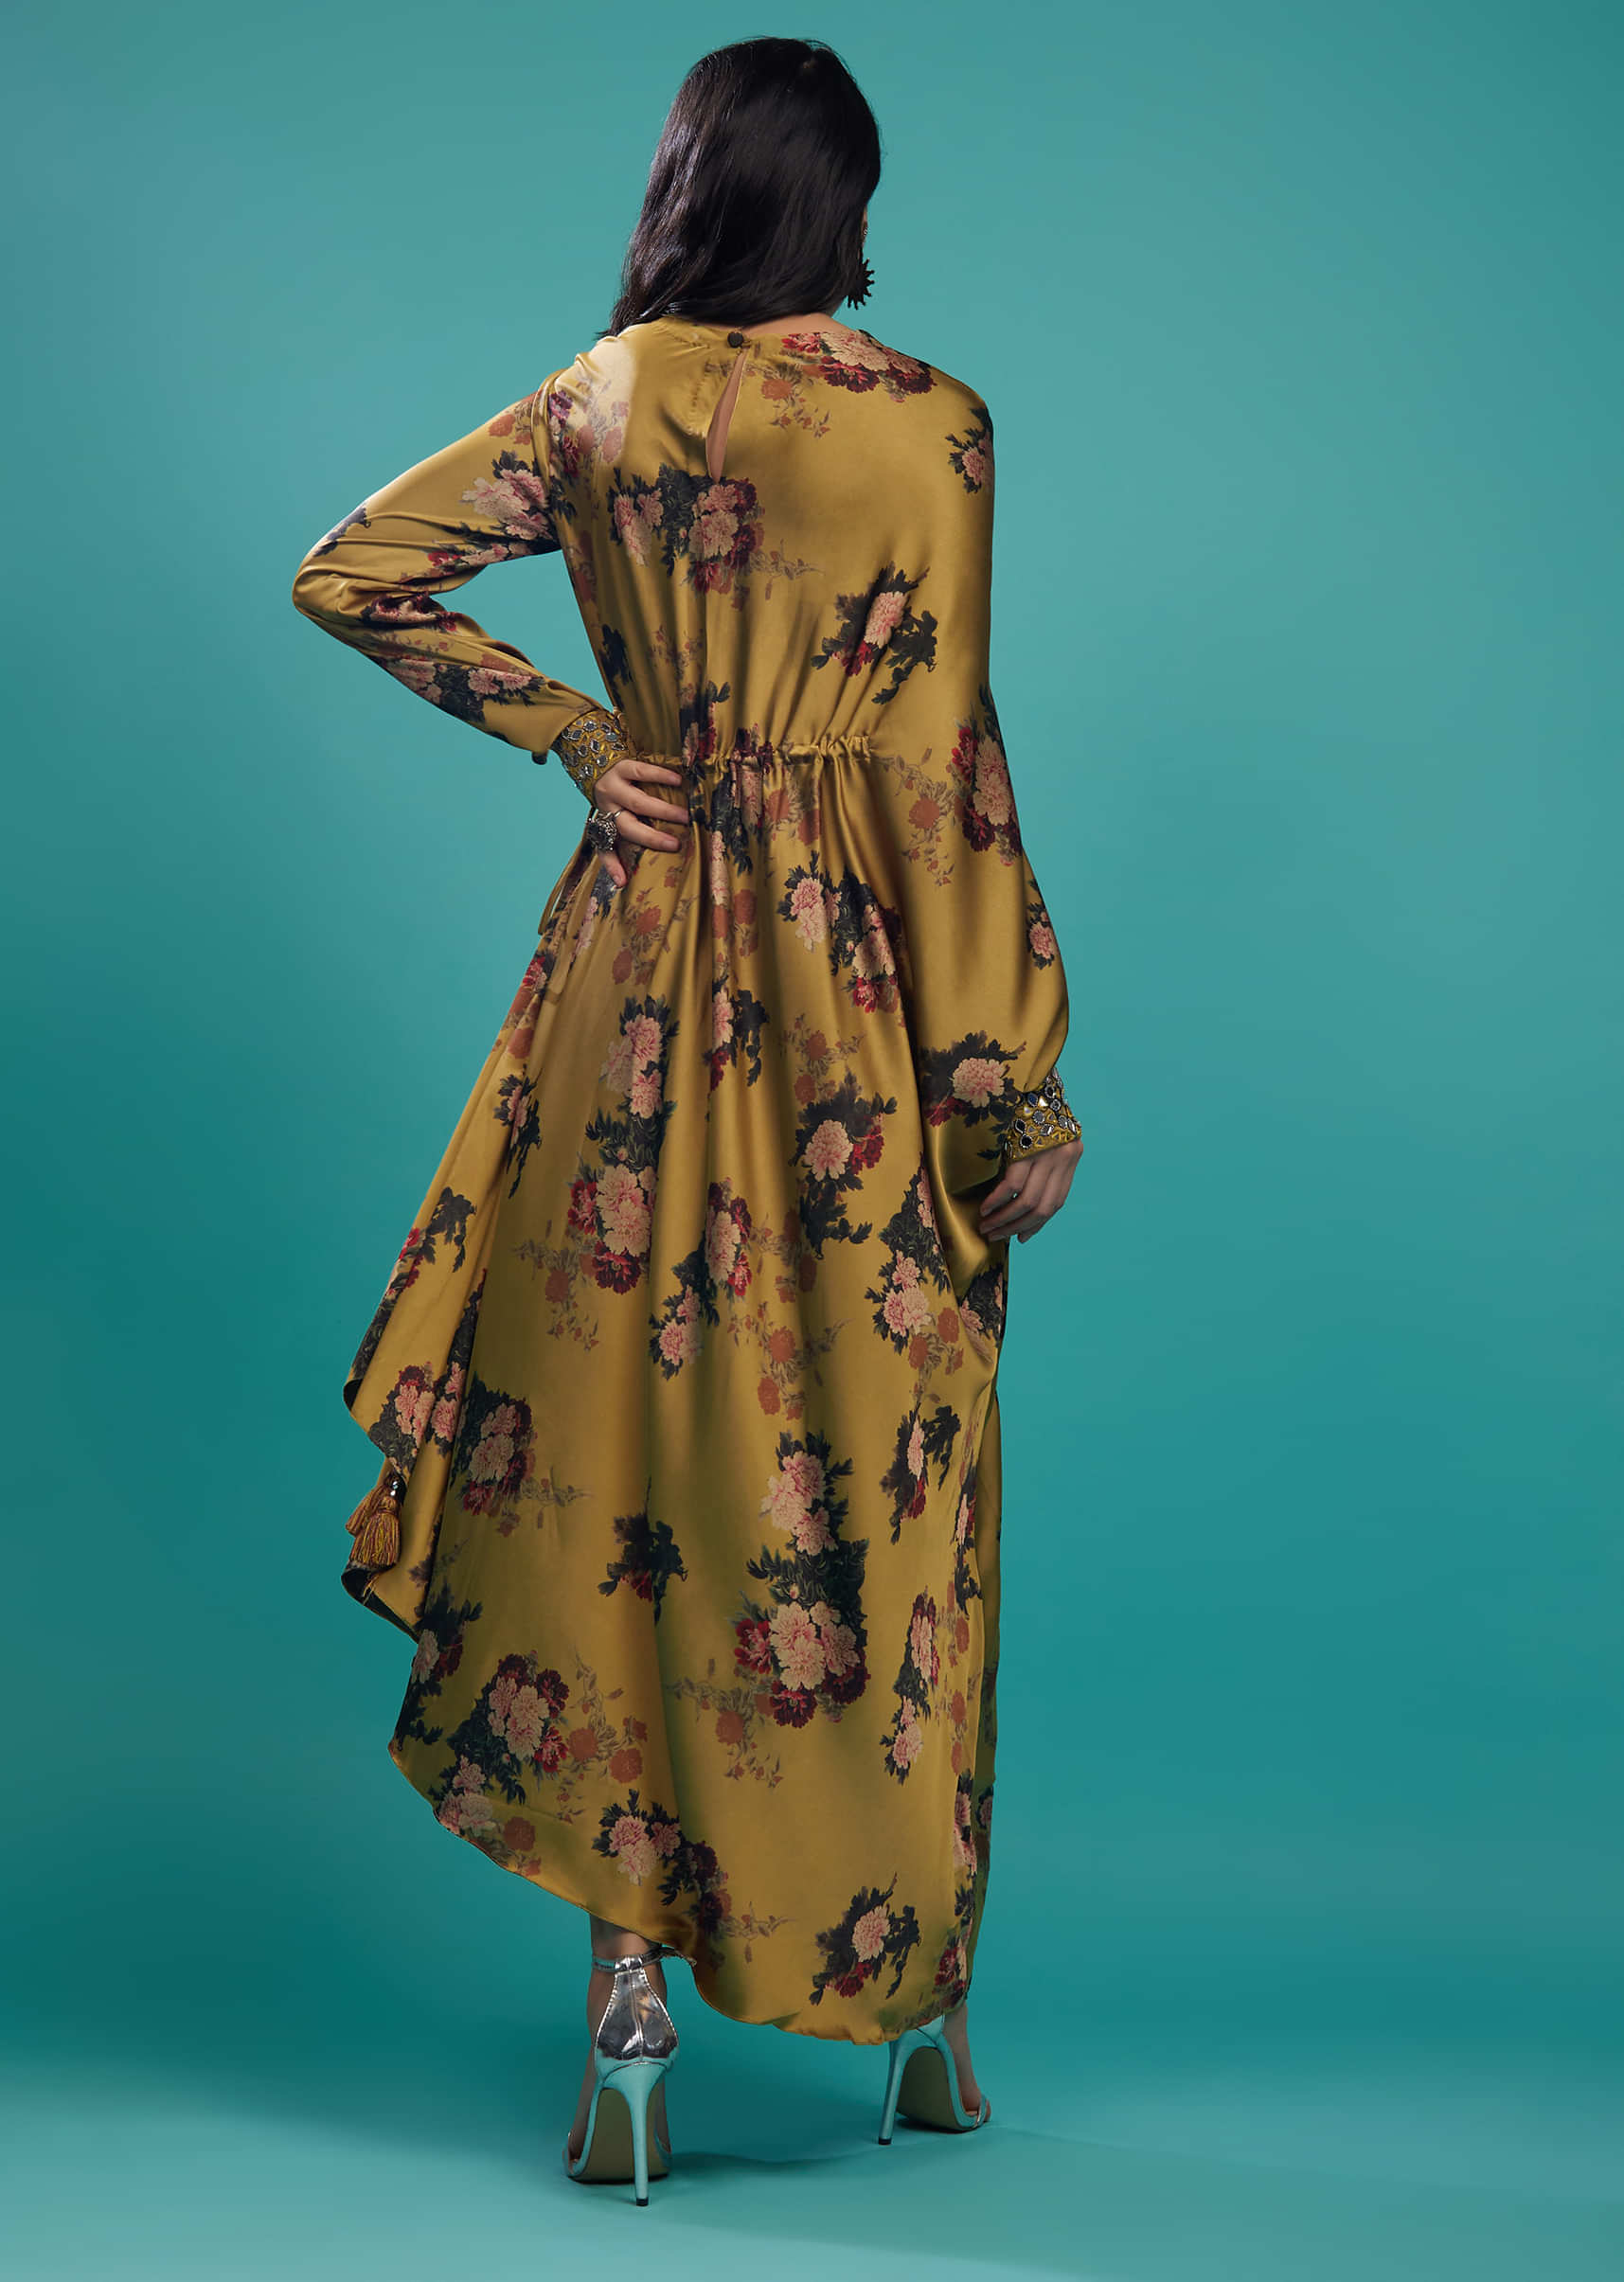 Ocher Yellow Silk Gown In Floral Print